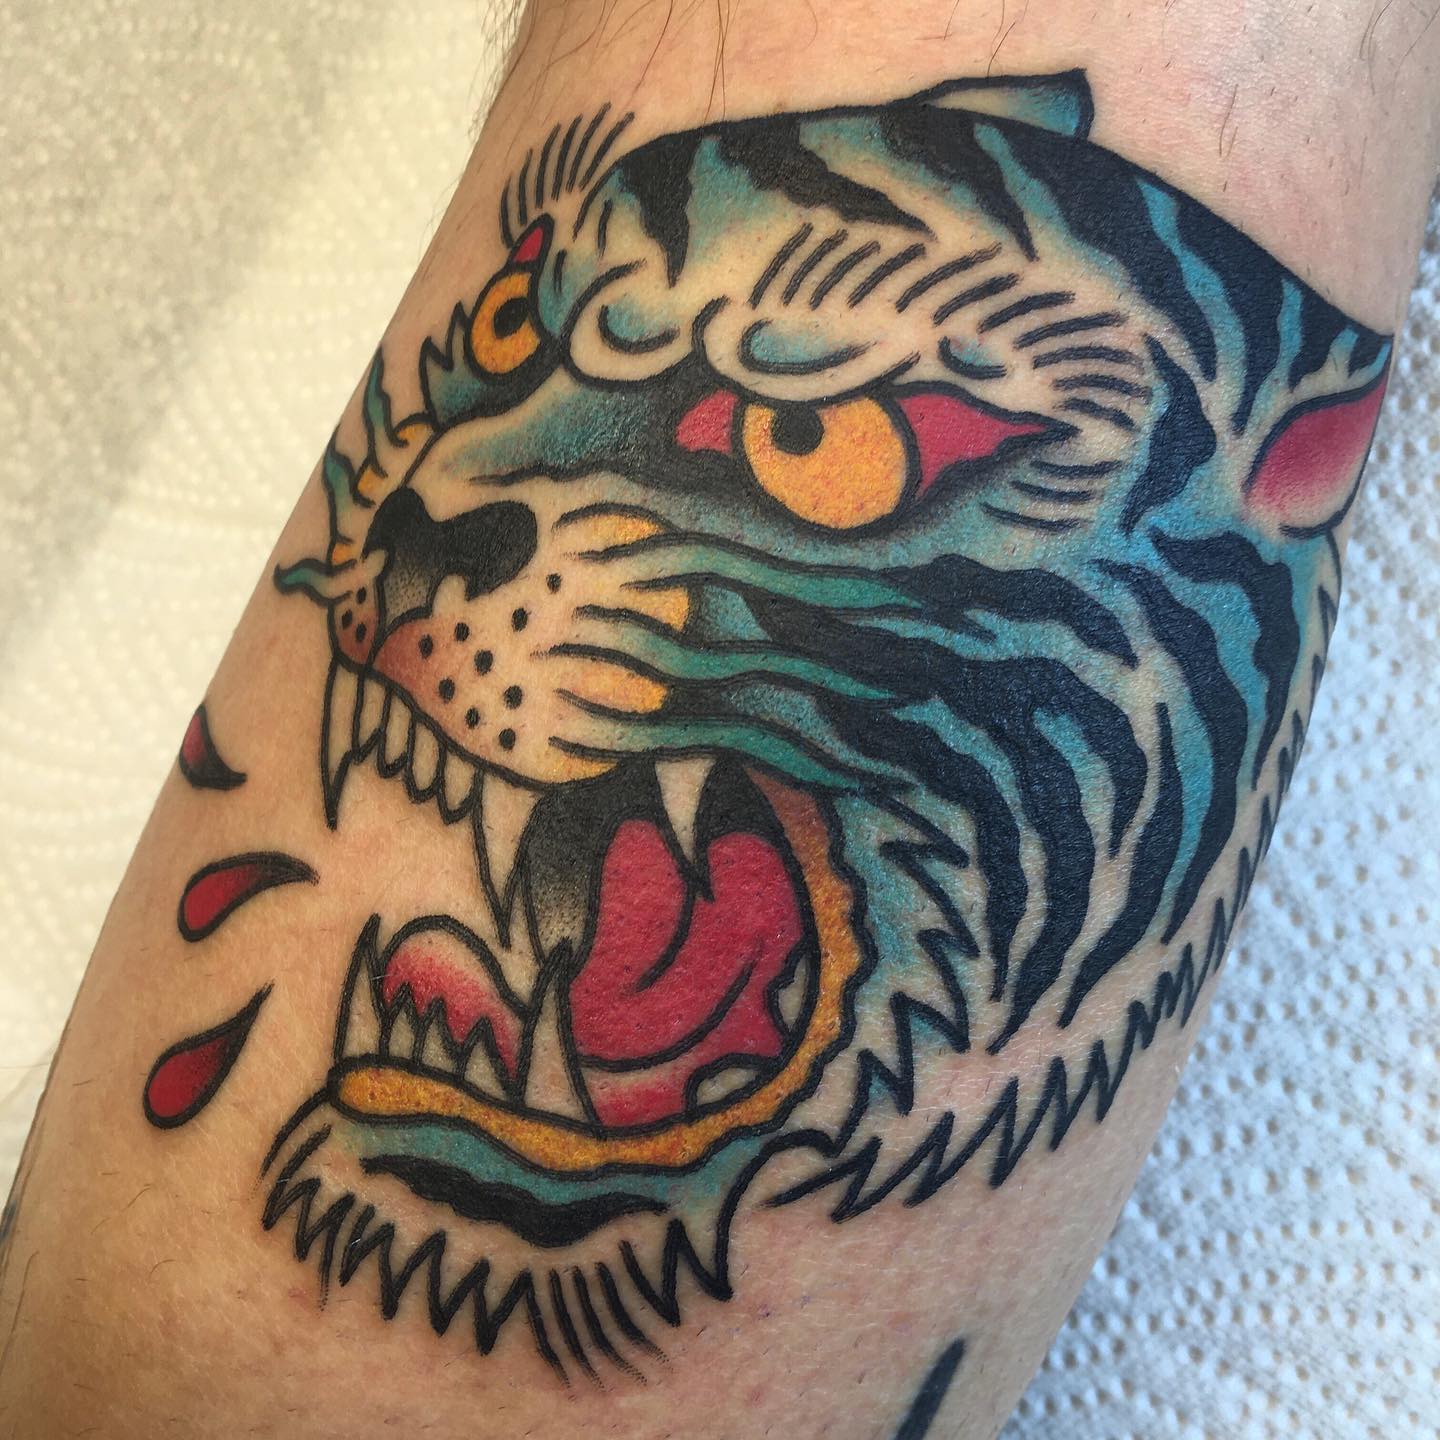 TIGER…
#tiger #tigertattoo #tattoo #tattoos #tattooed #tattoolife #tattooing #bo